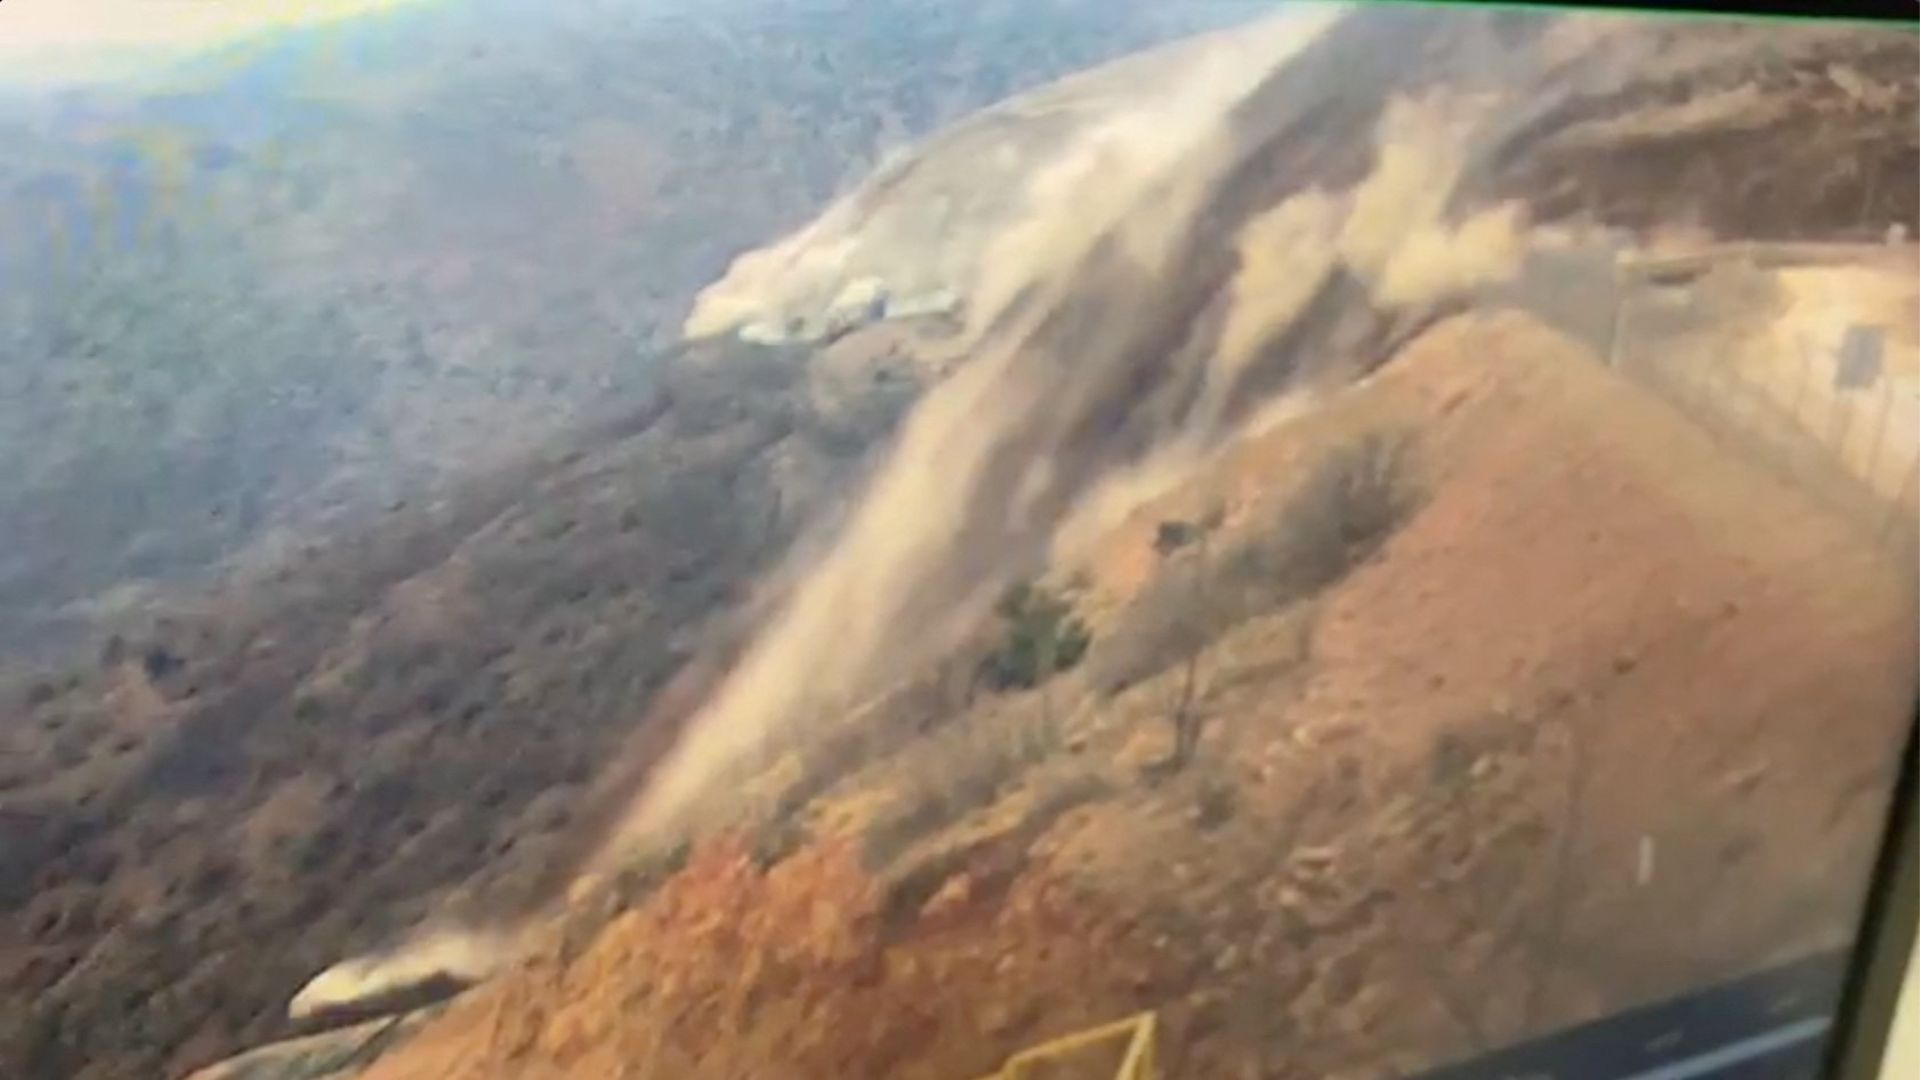 A CCTV monitor shows a landslide at an Anagold Mining operation in Ilic, Türkiye. /Mustafa Sarigul via X/via Reuters